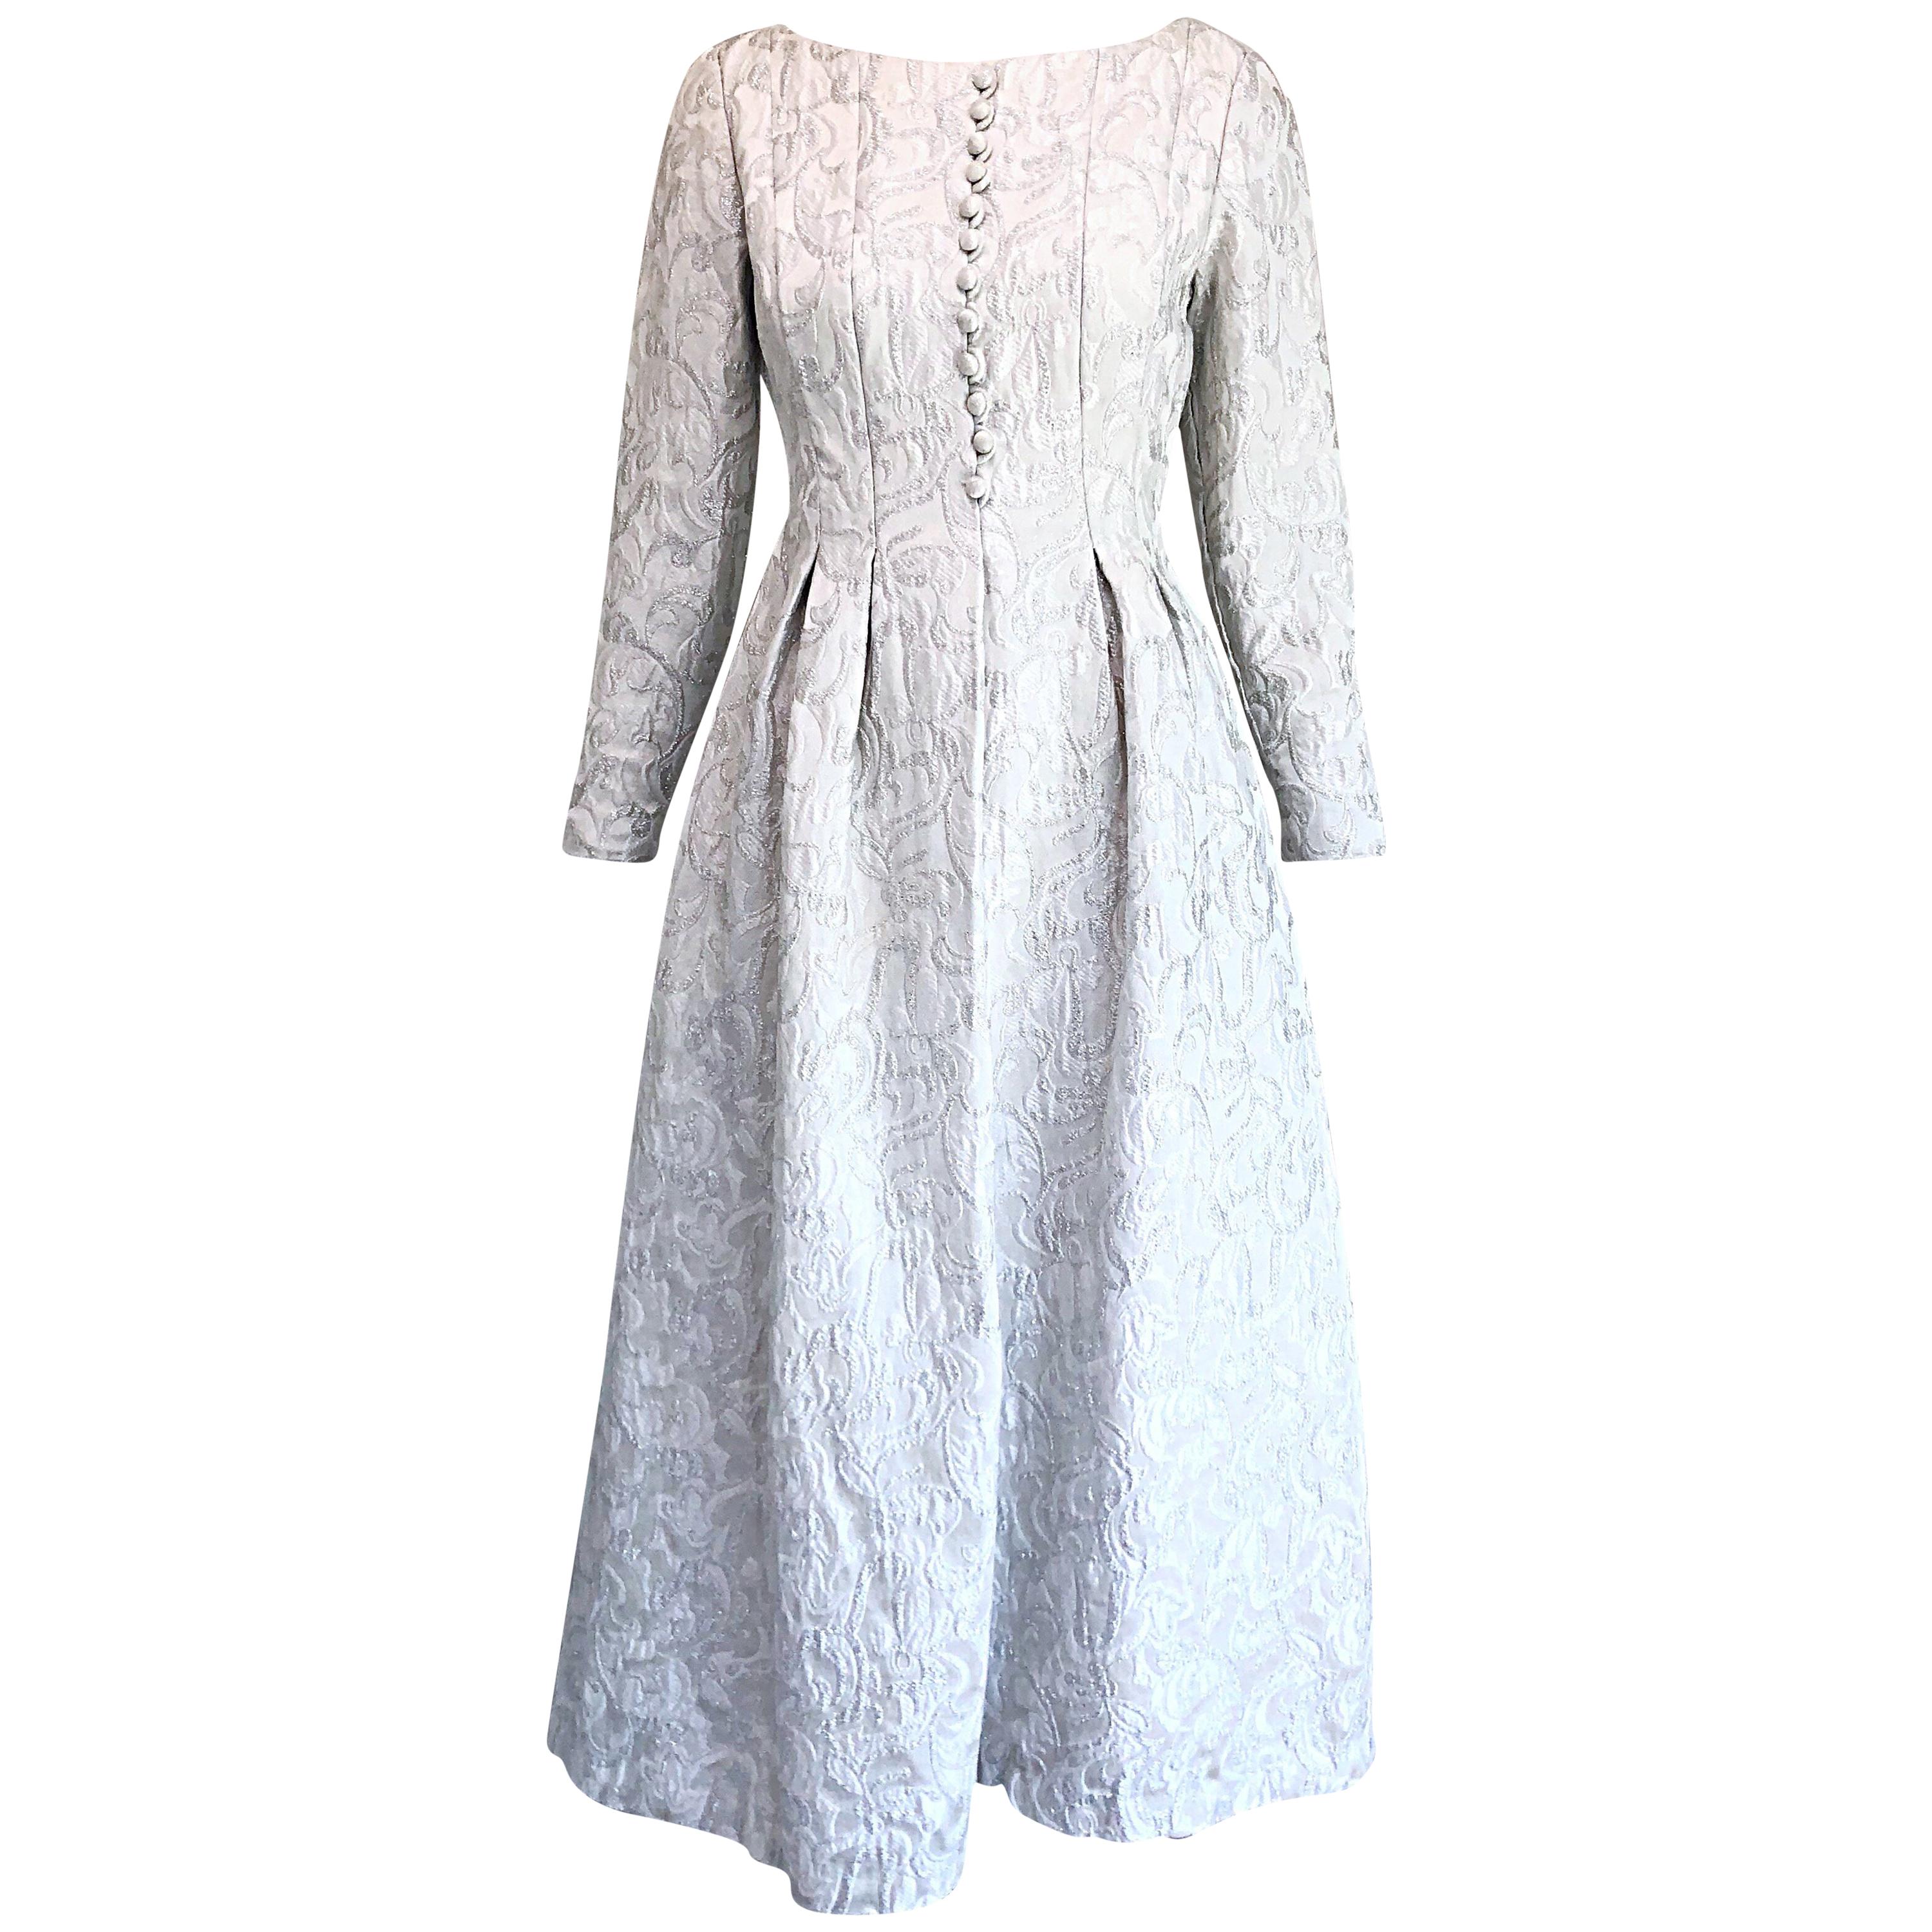 Ceil Chapman 1960s White + Silver Silk Brocade Vintage 60s Midi Dress Gown 